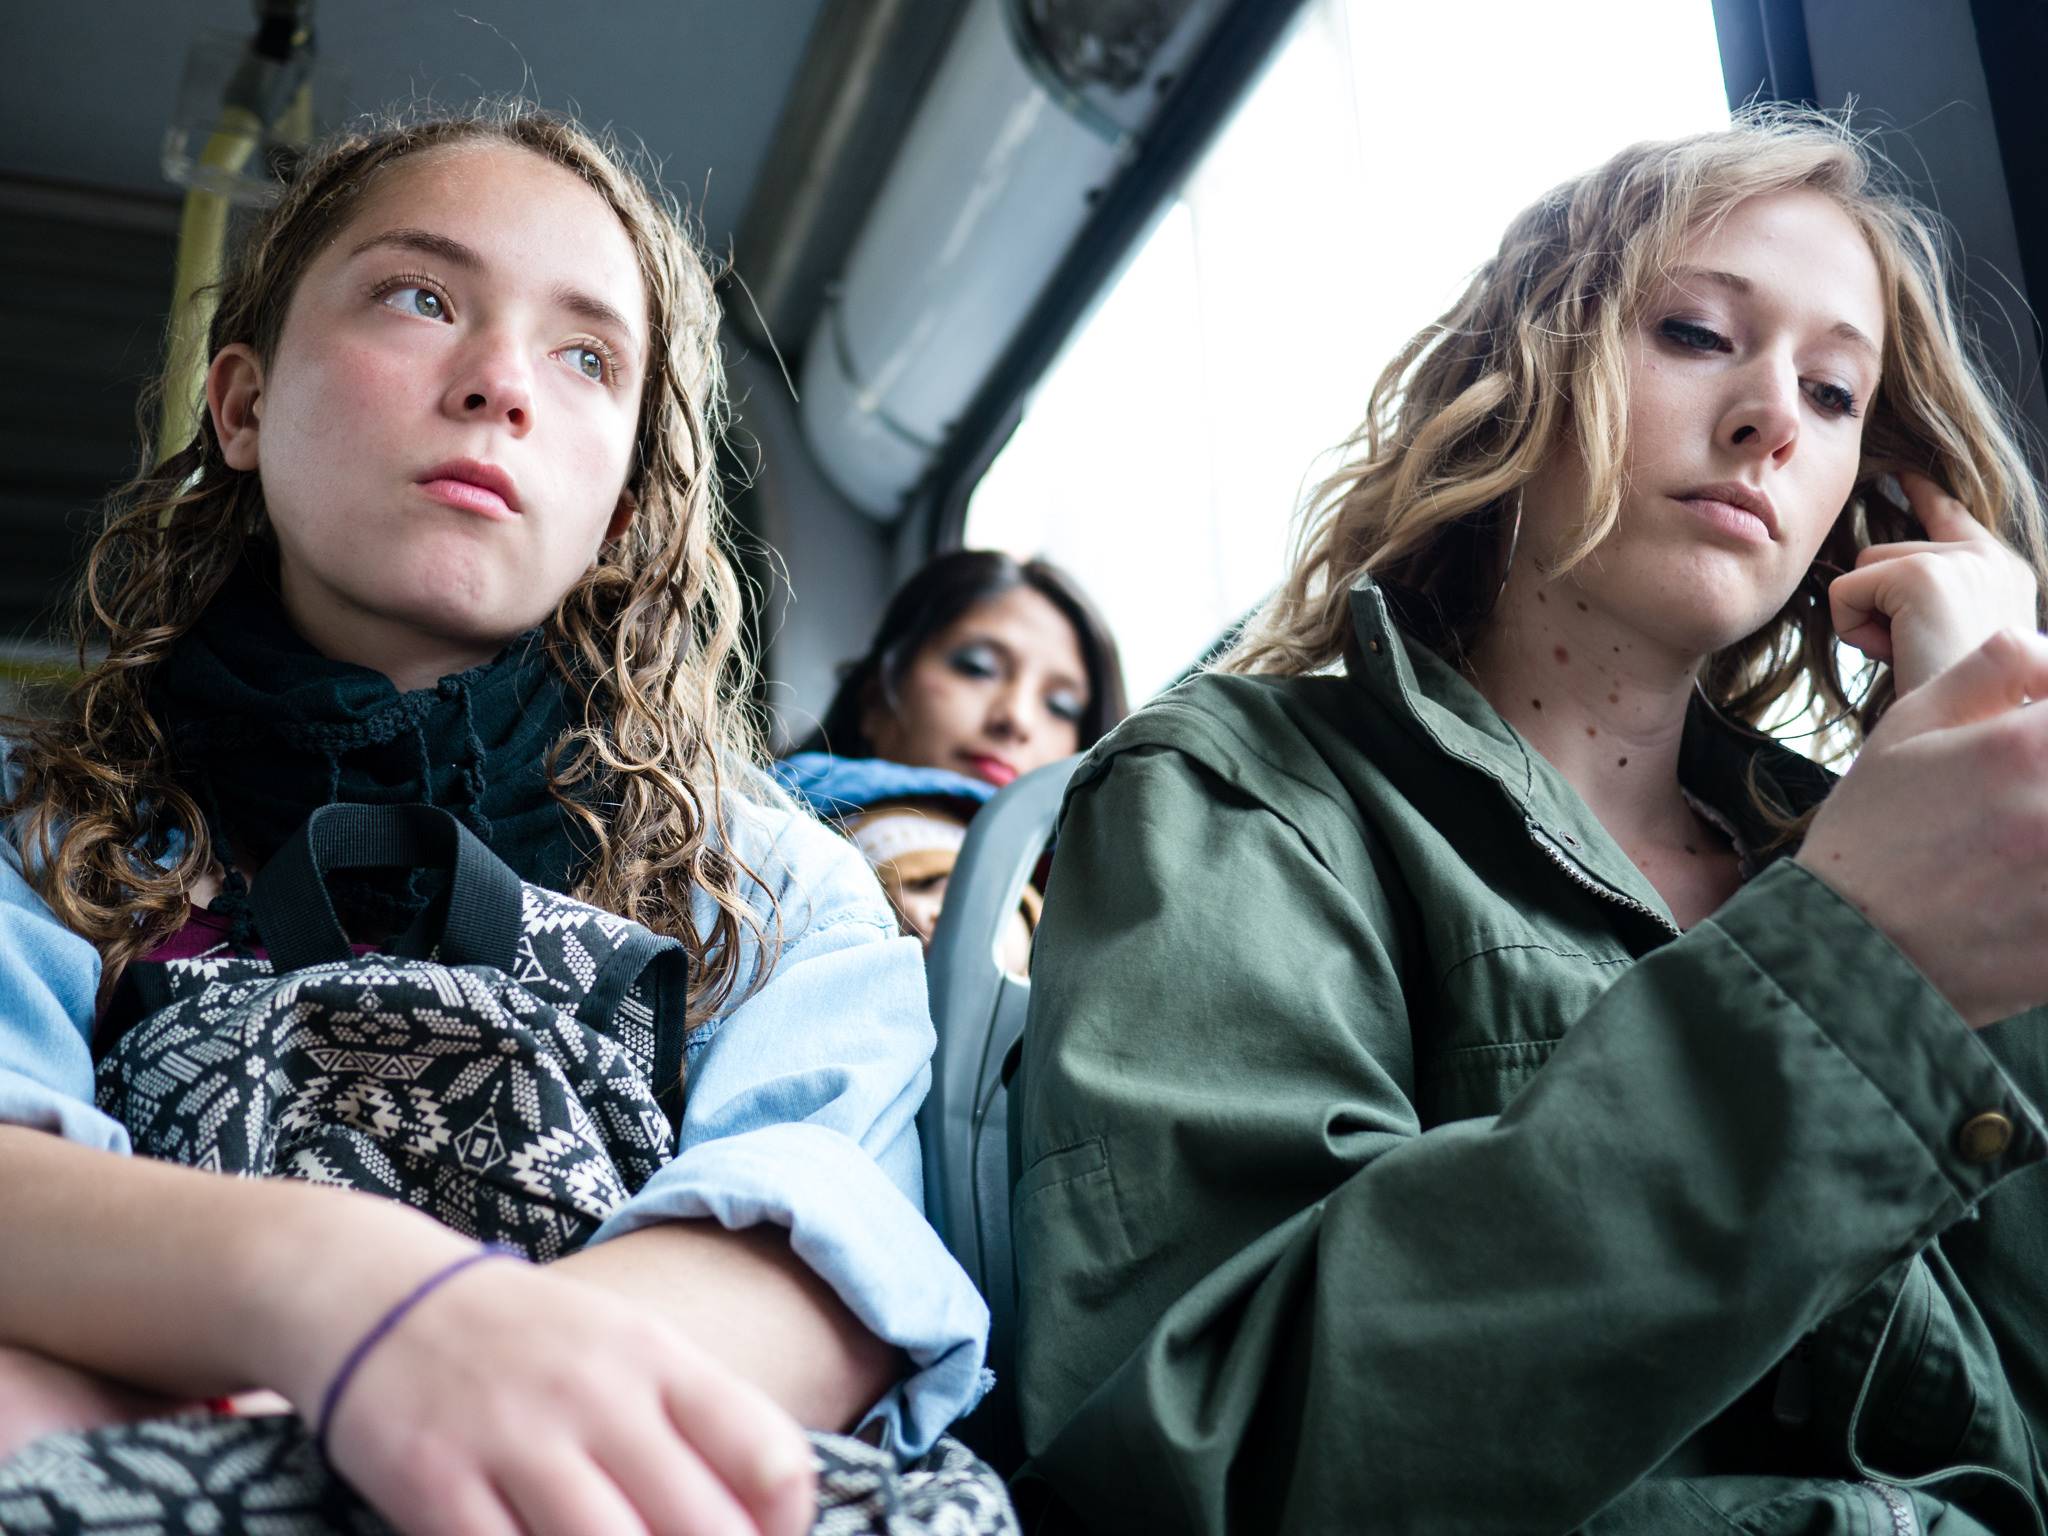 German trains offer women a safe seat